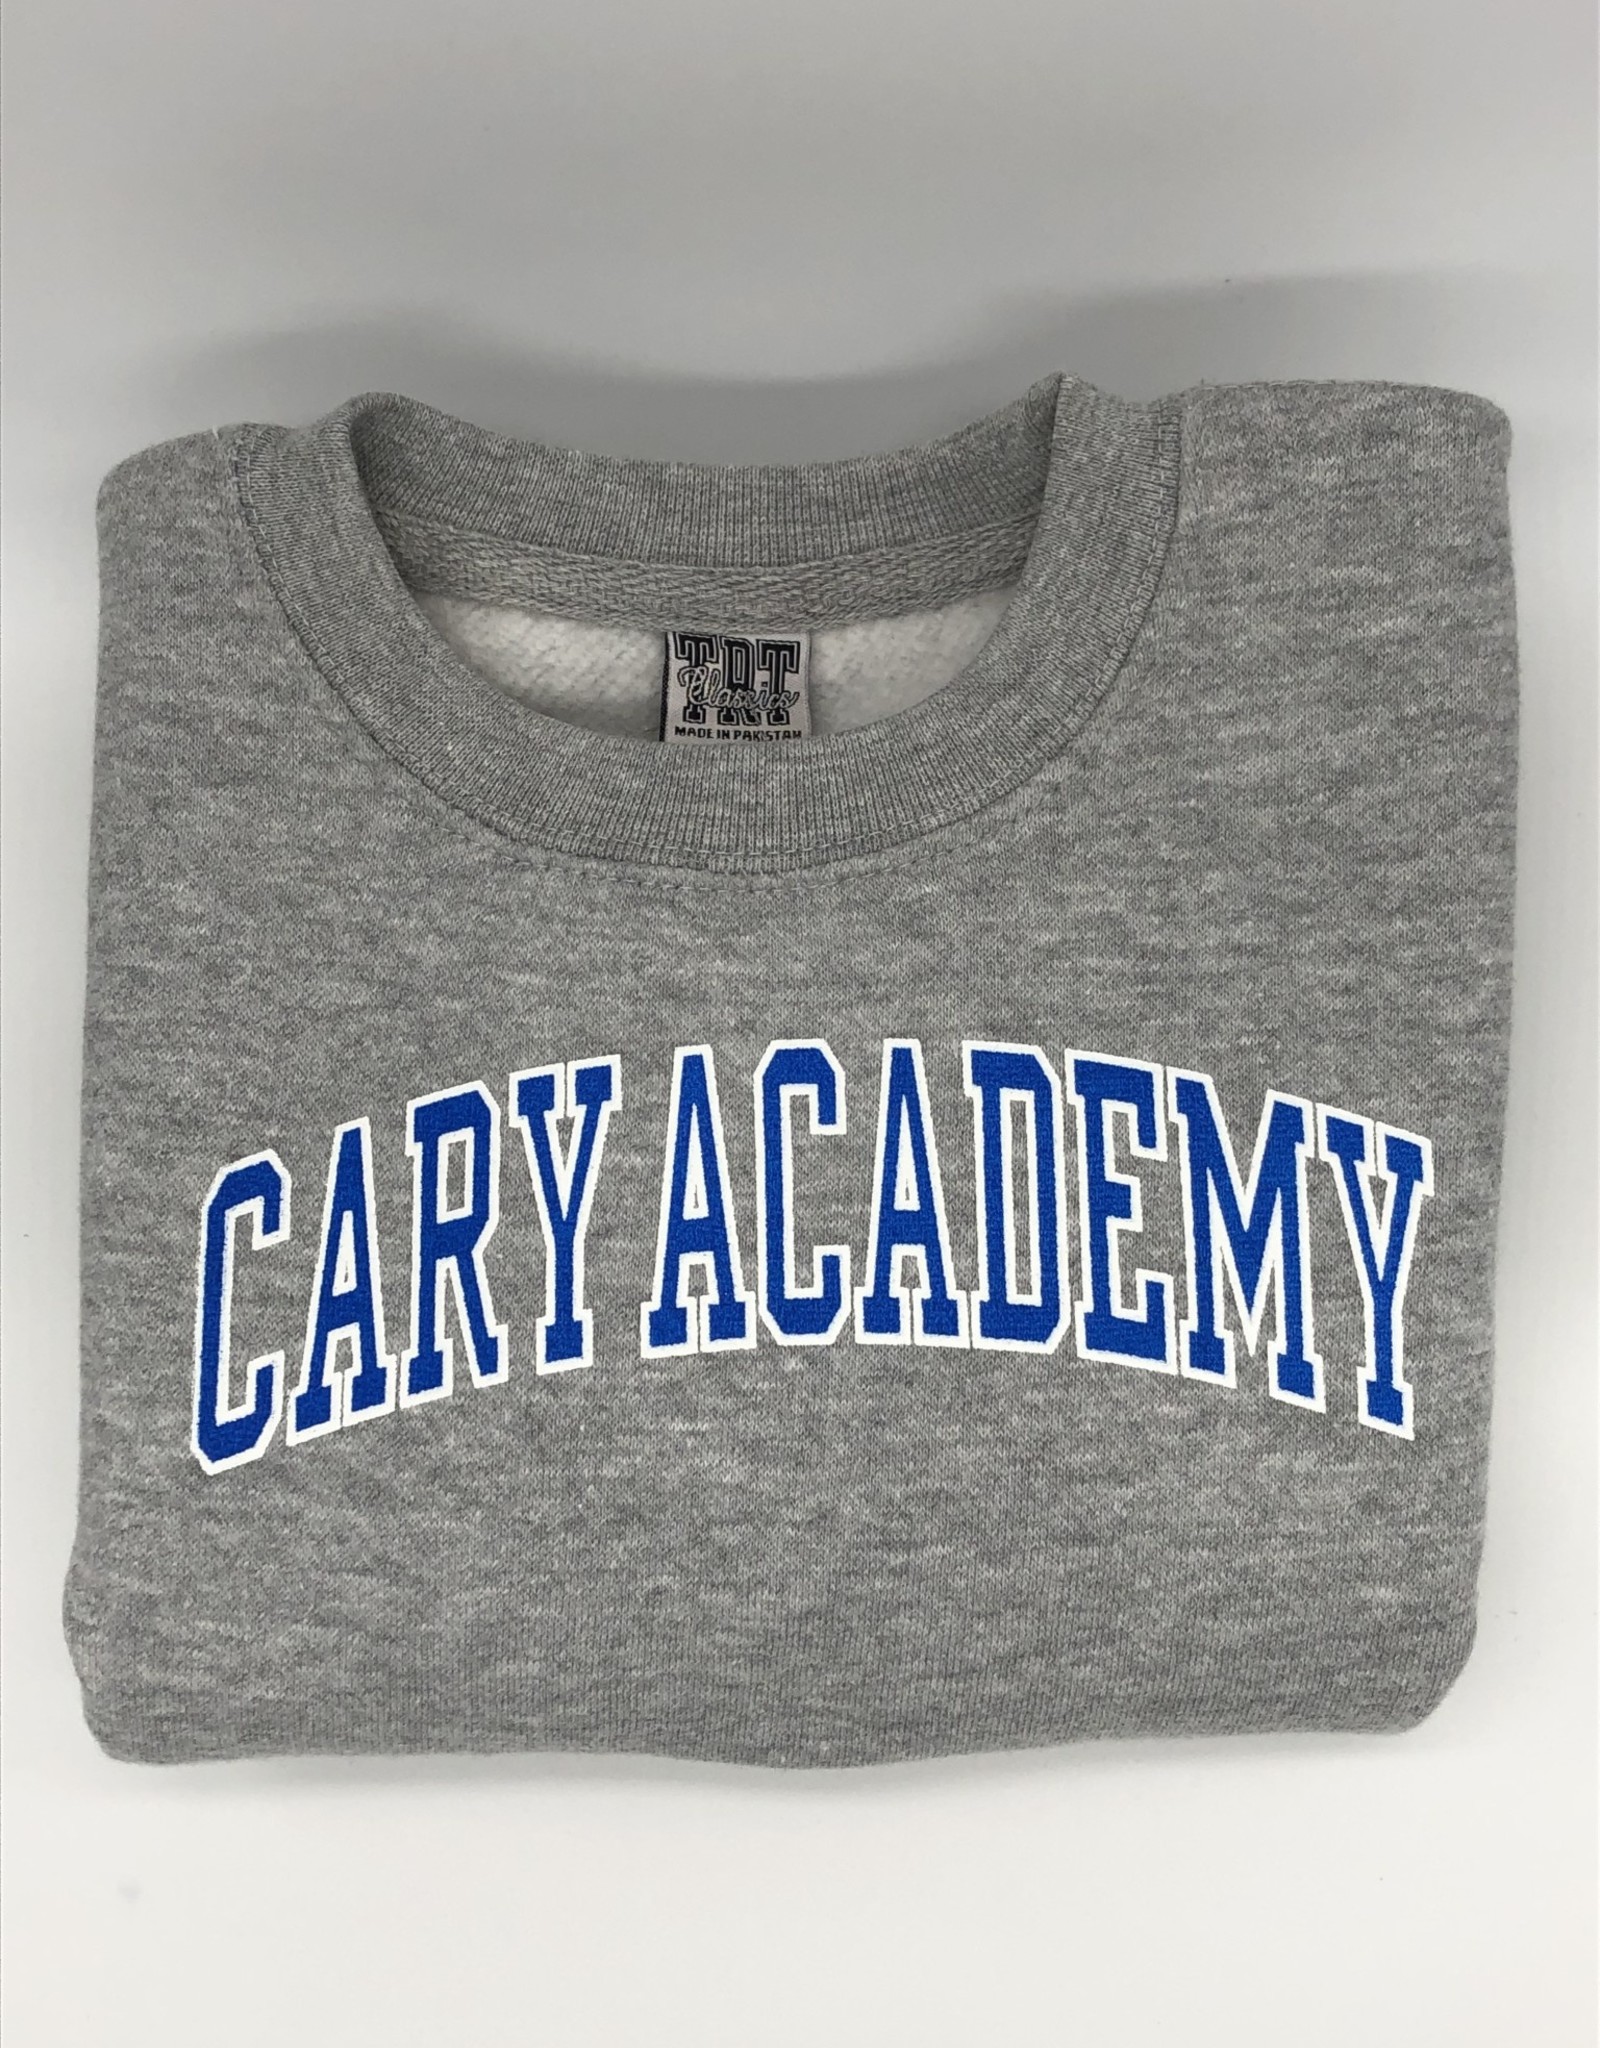 TRT Classics Cary Academy Crew Sweatshirt Toddler